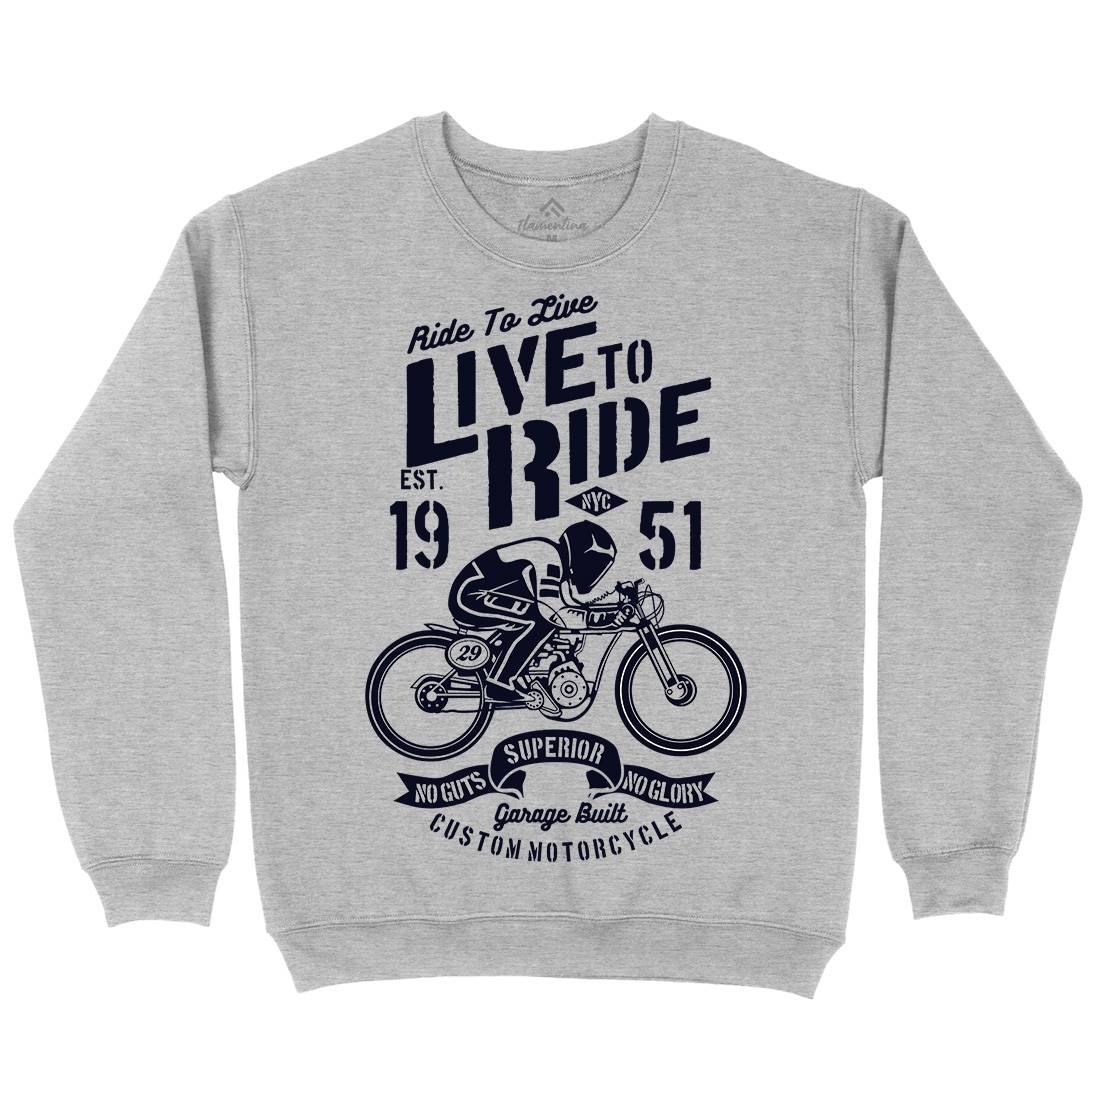 Live To Ride Kids Crew Neck Sweatshirt Motorcycles B227